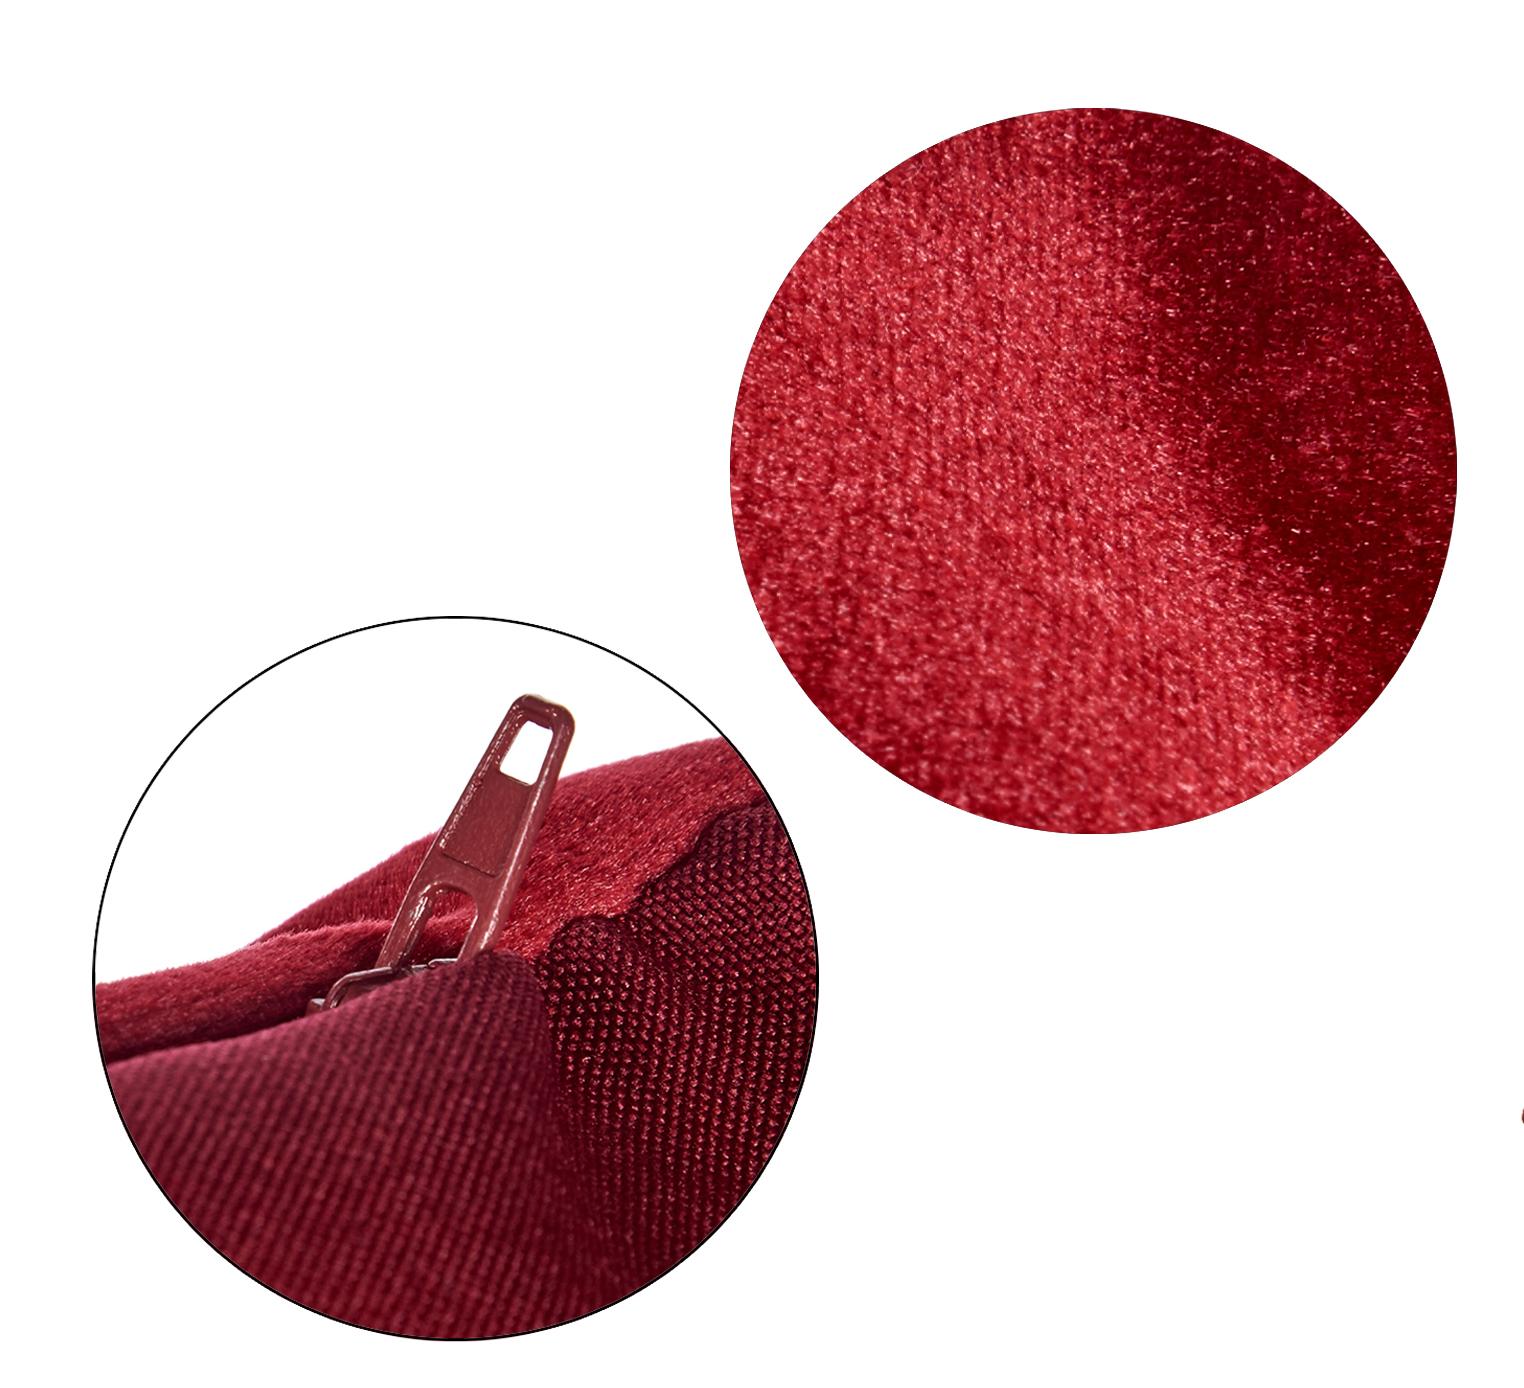 Slike GIFTDECOR Ukrasni somotni jastuk 60x60 crveni